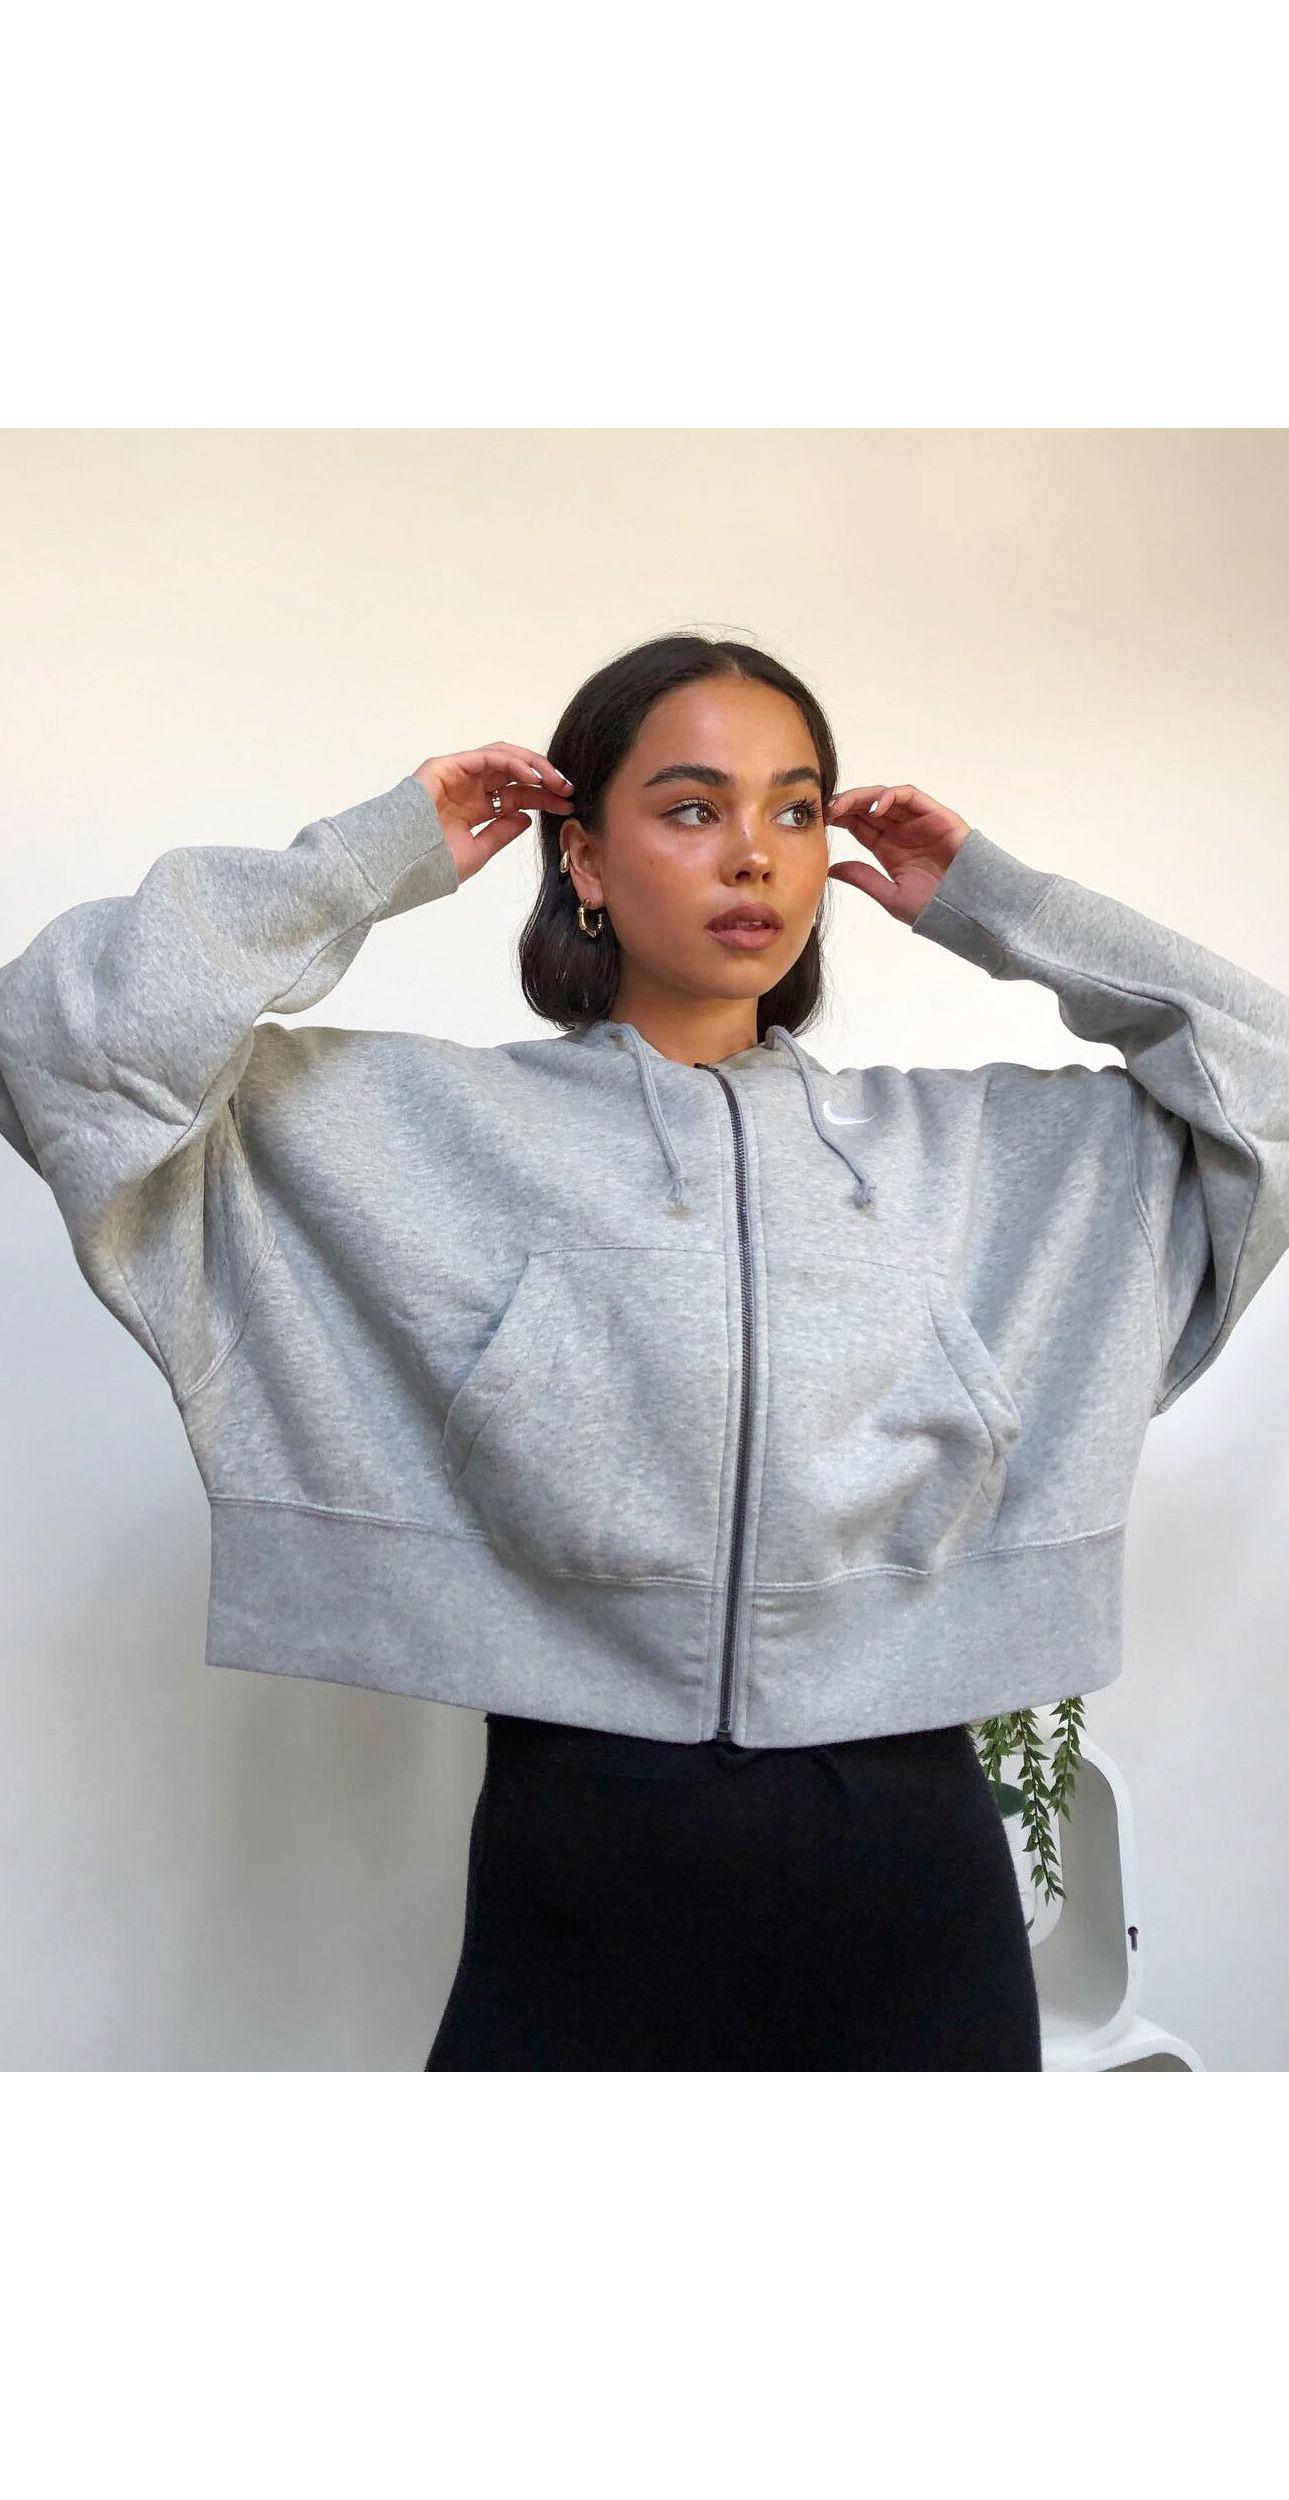 nike mini swoosh oversized cropped grey zip through hoodie